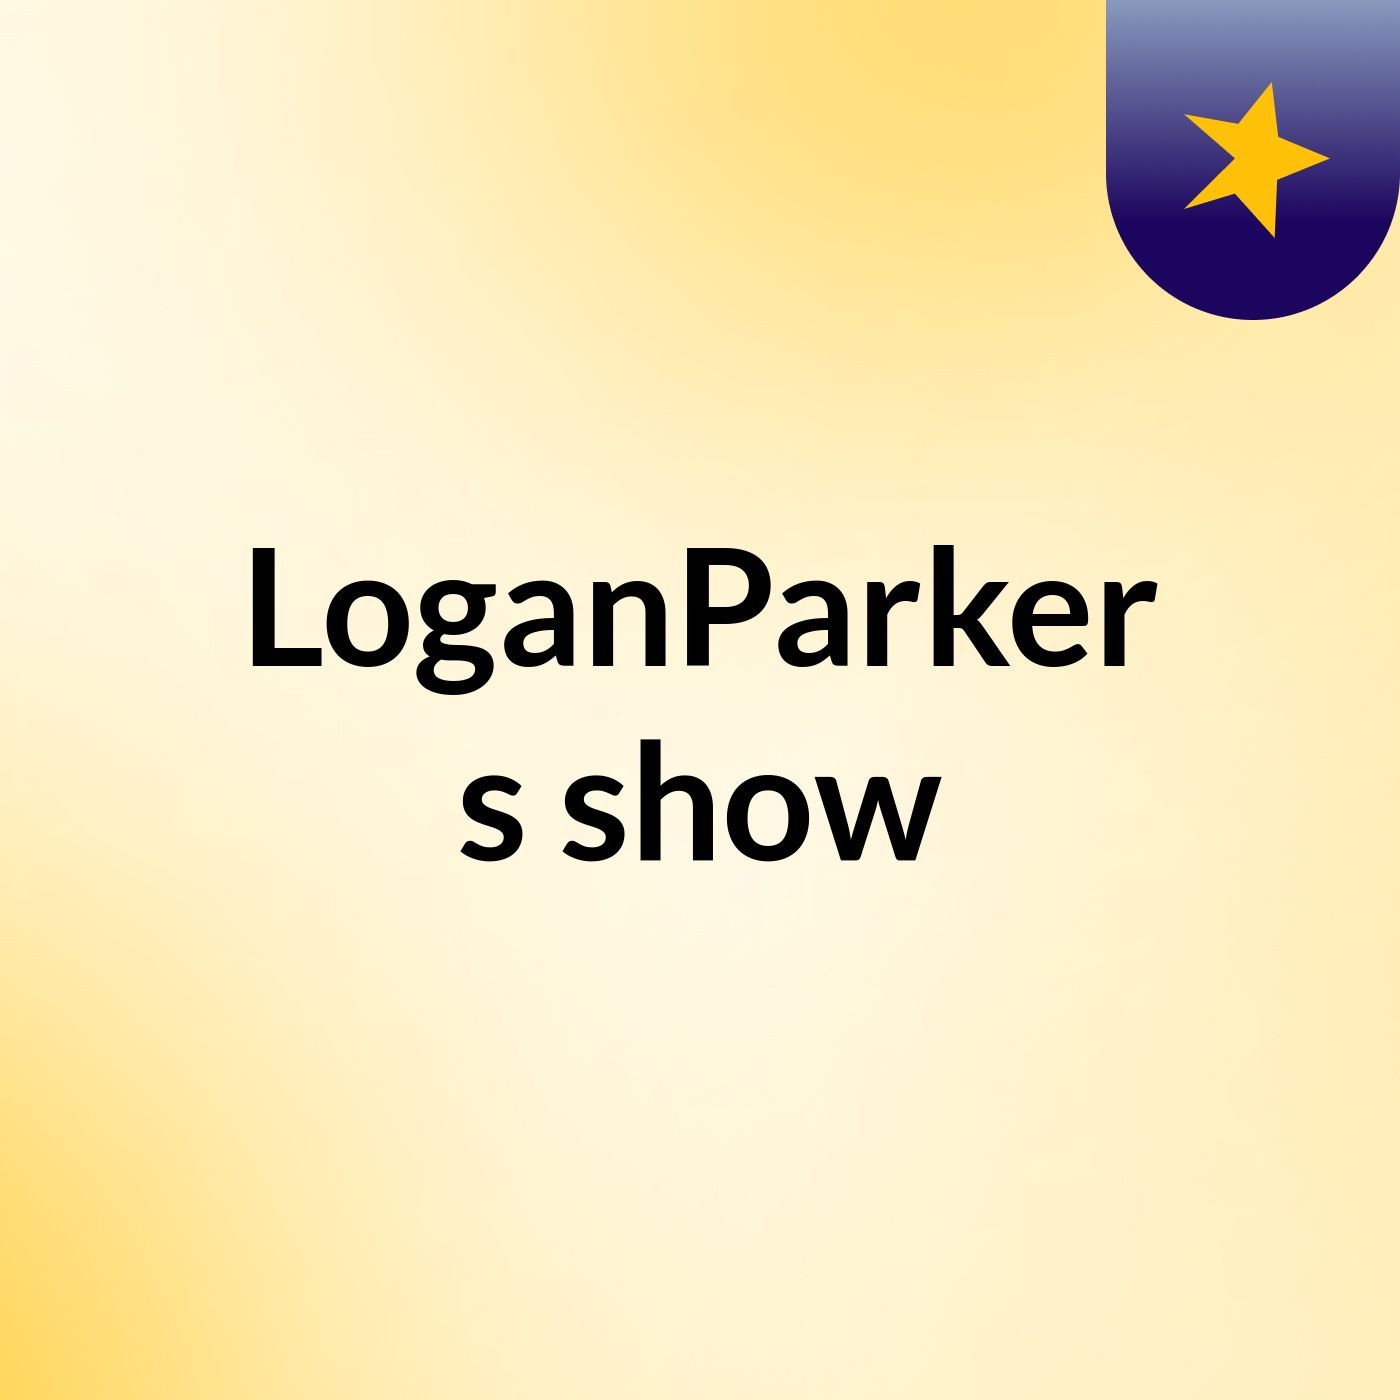 LoganParker's show